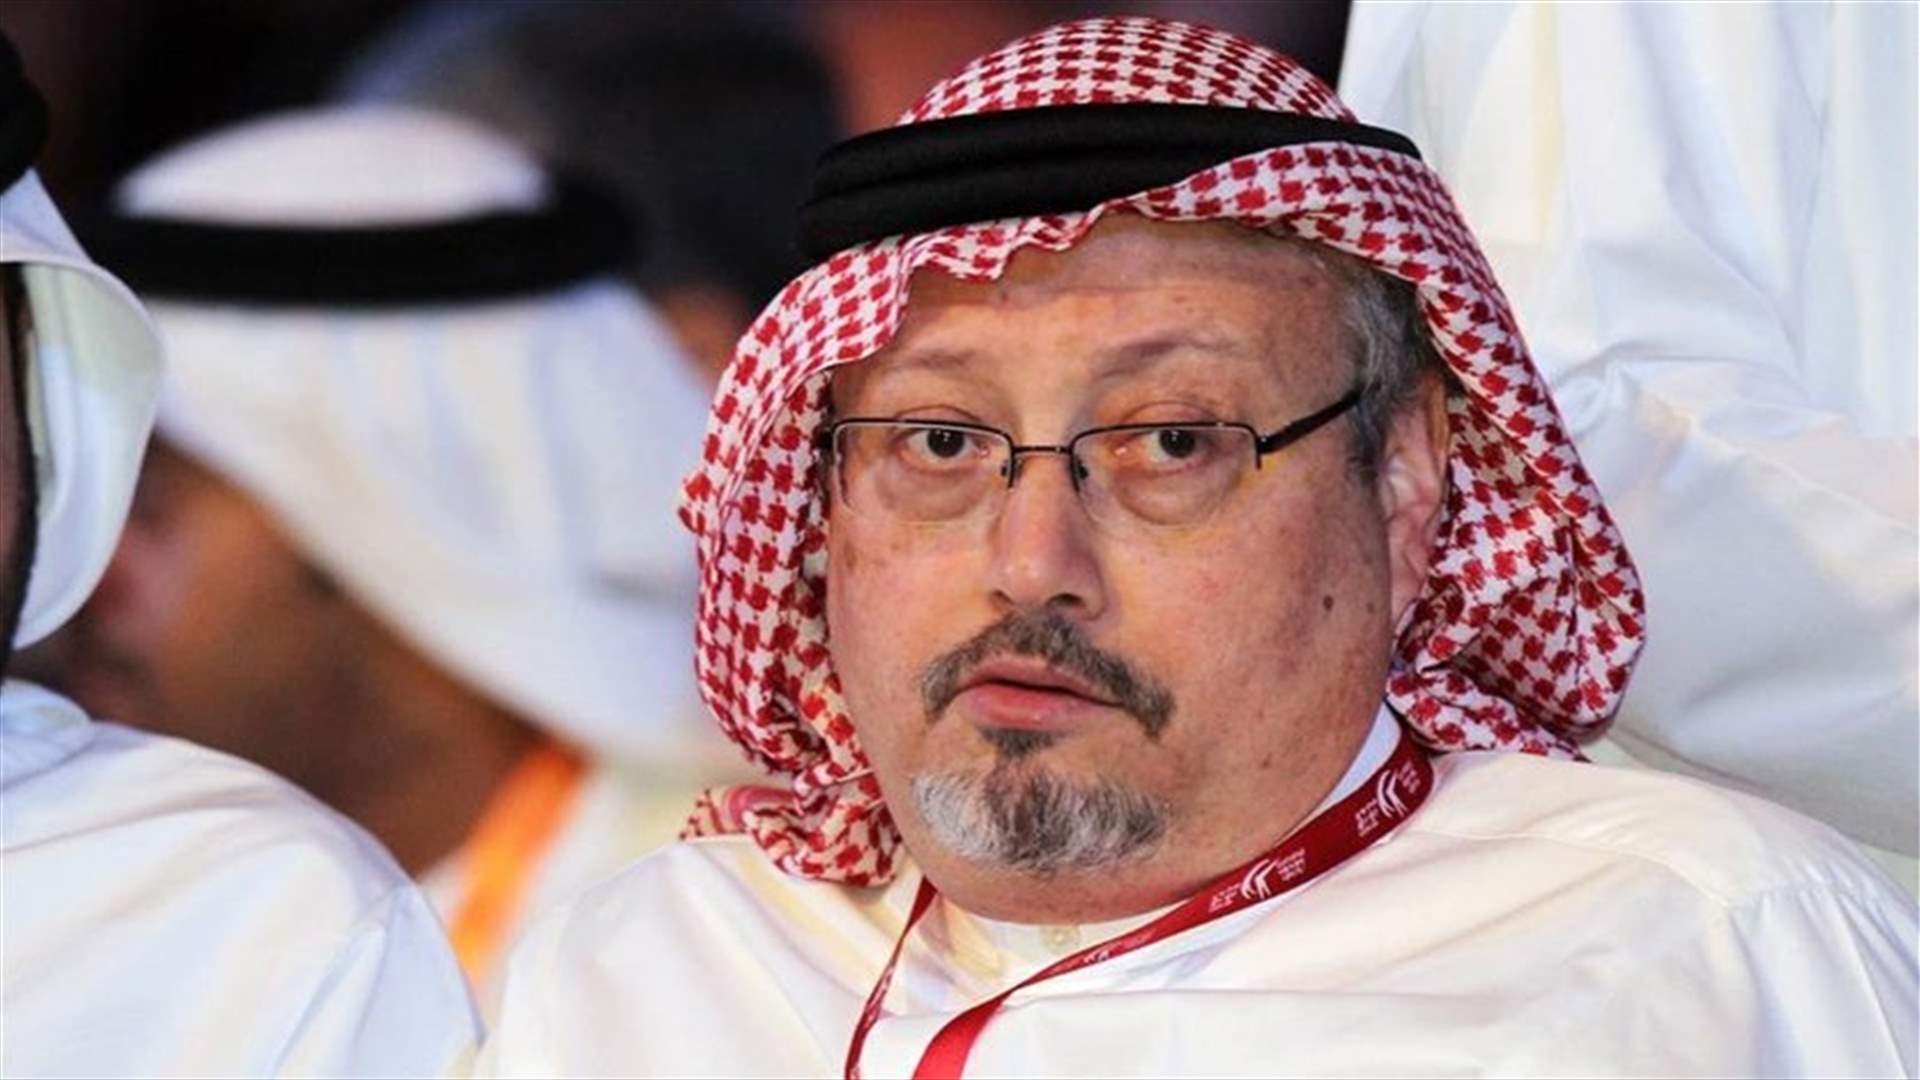 Saudi Arabia denies allegations regarding murder of Khashoggi -Interior Minister